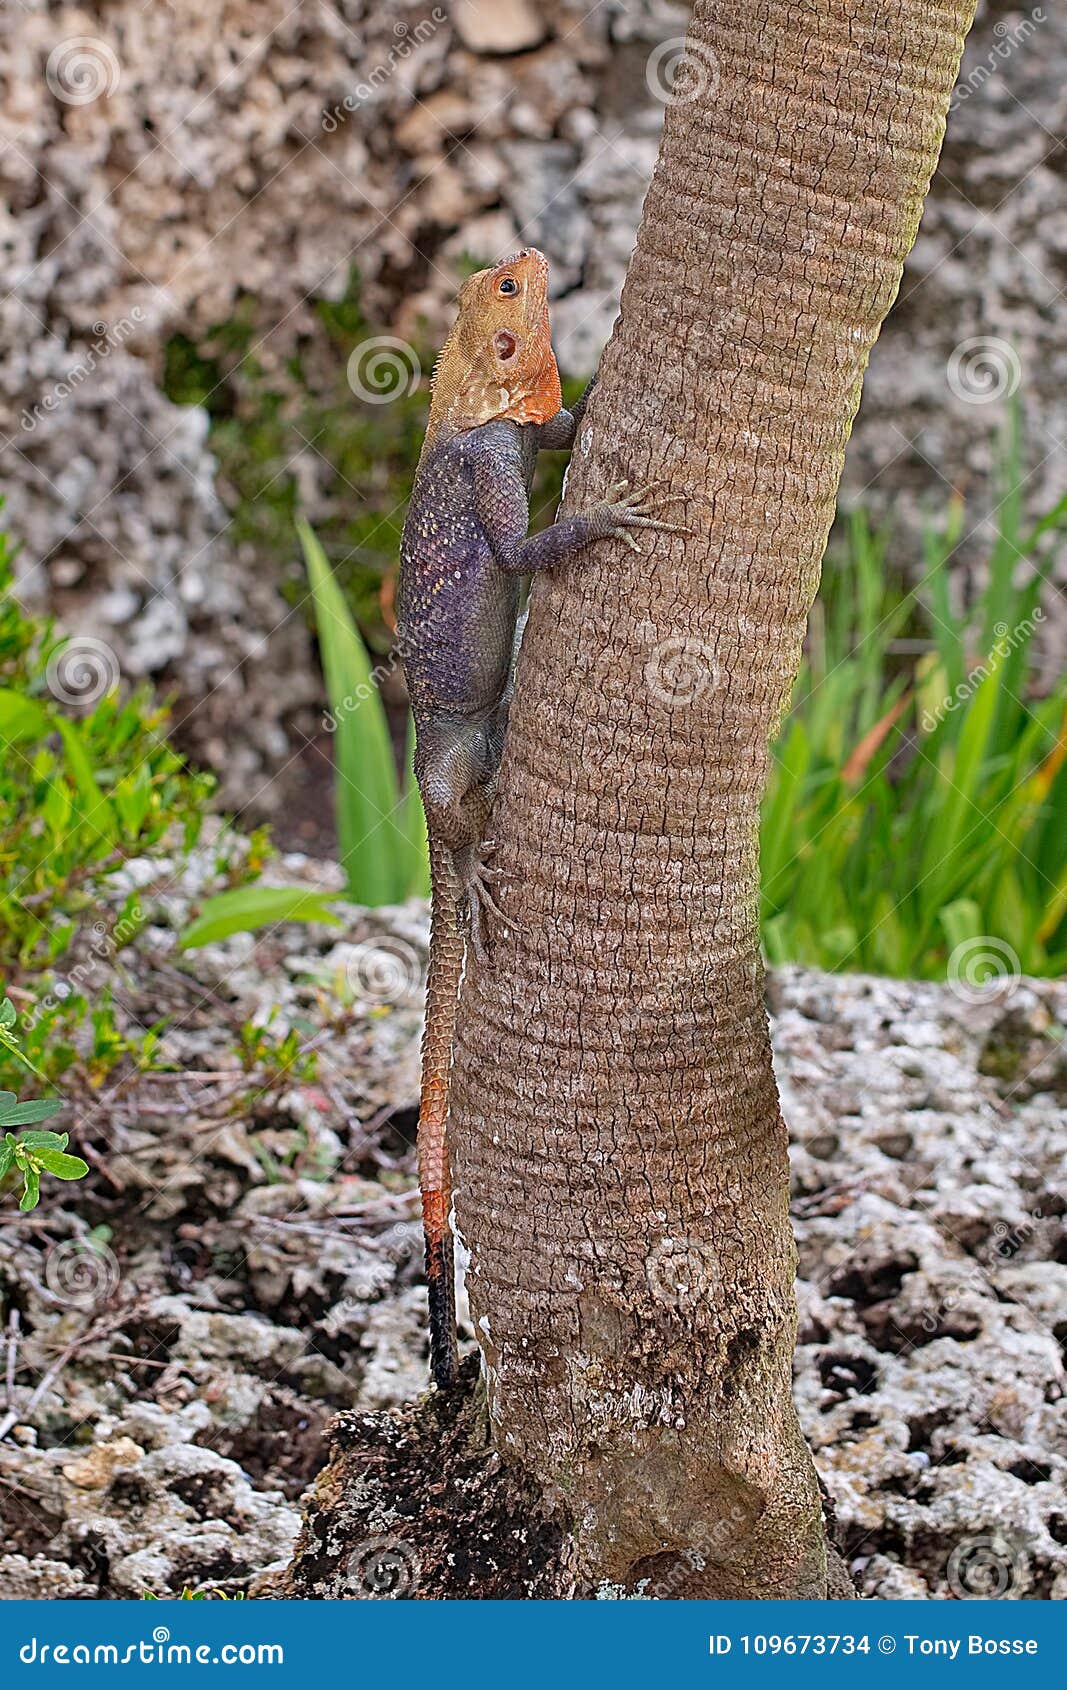 kenyan rock agama lizard climbing tree